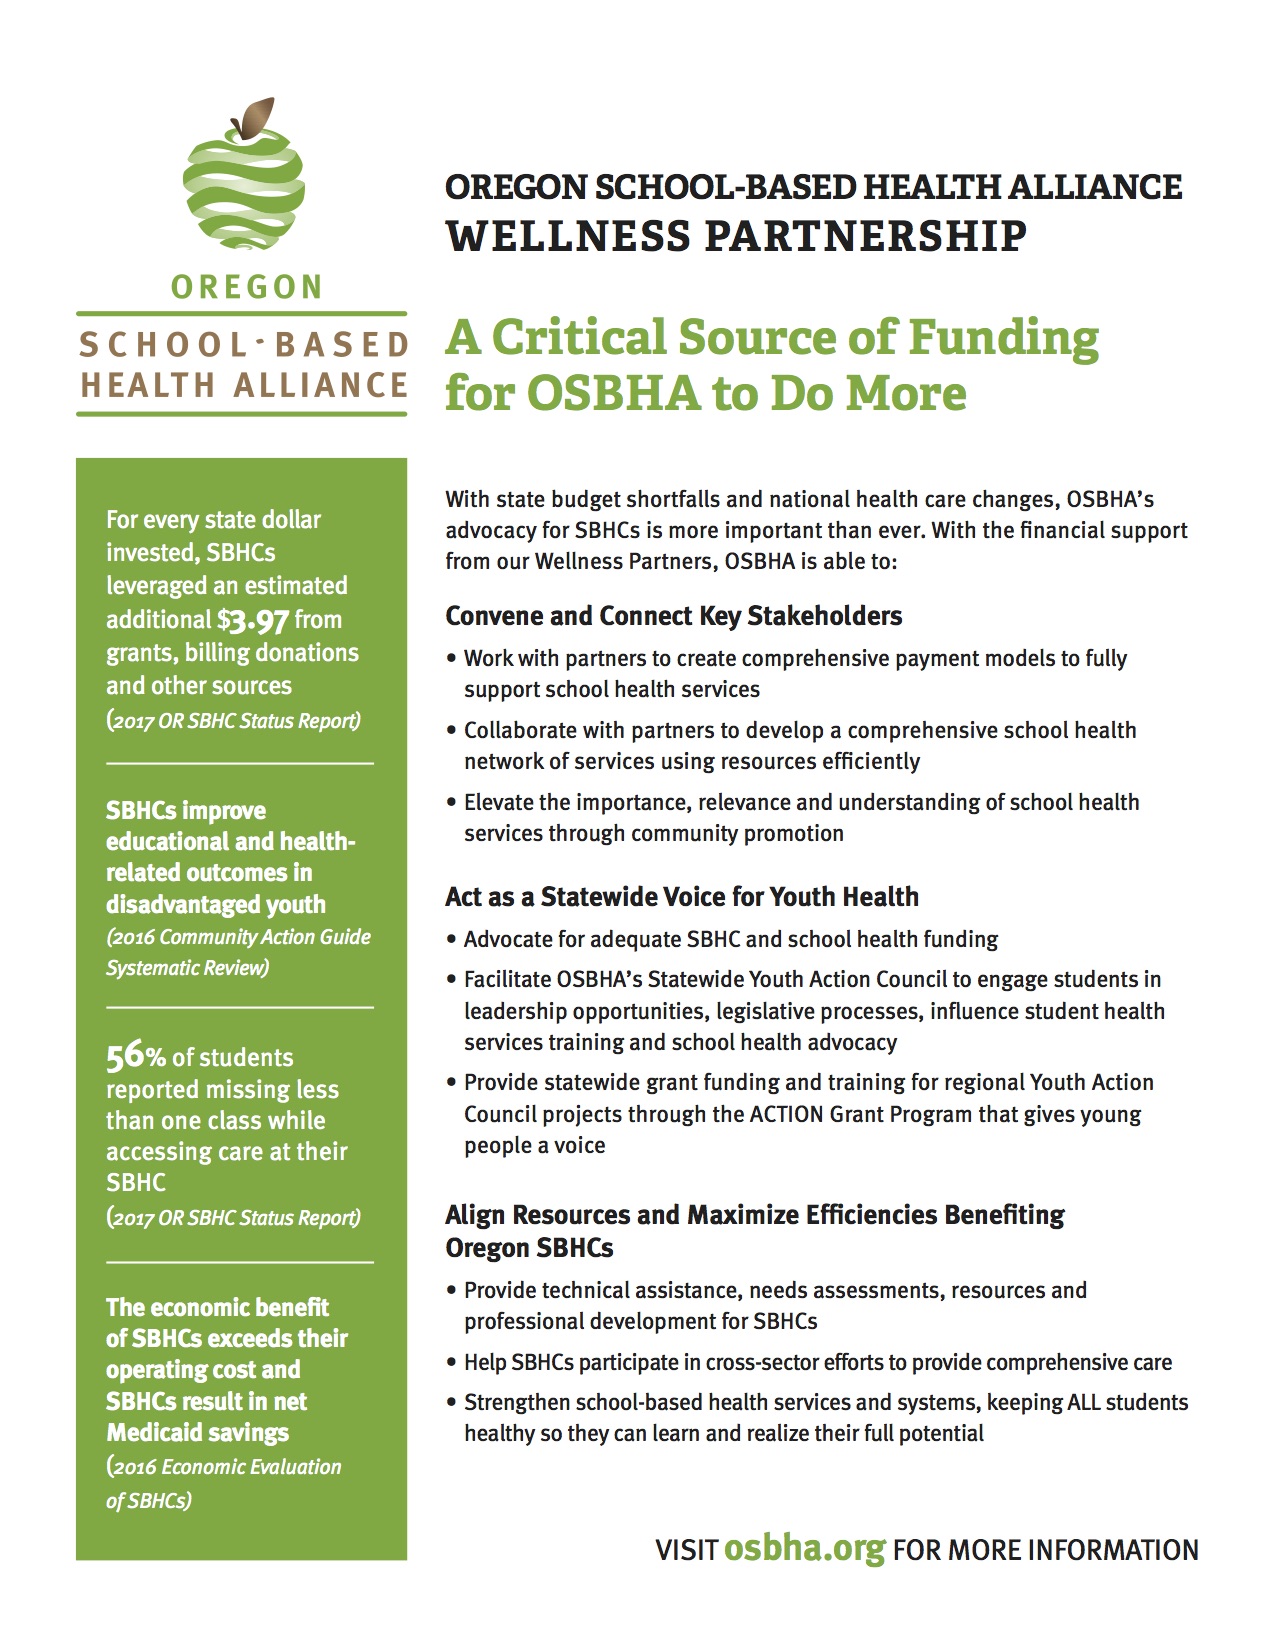 OSBHA_Wellness_partnership_insert_PRINT.jpg